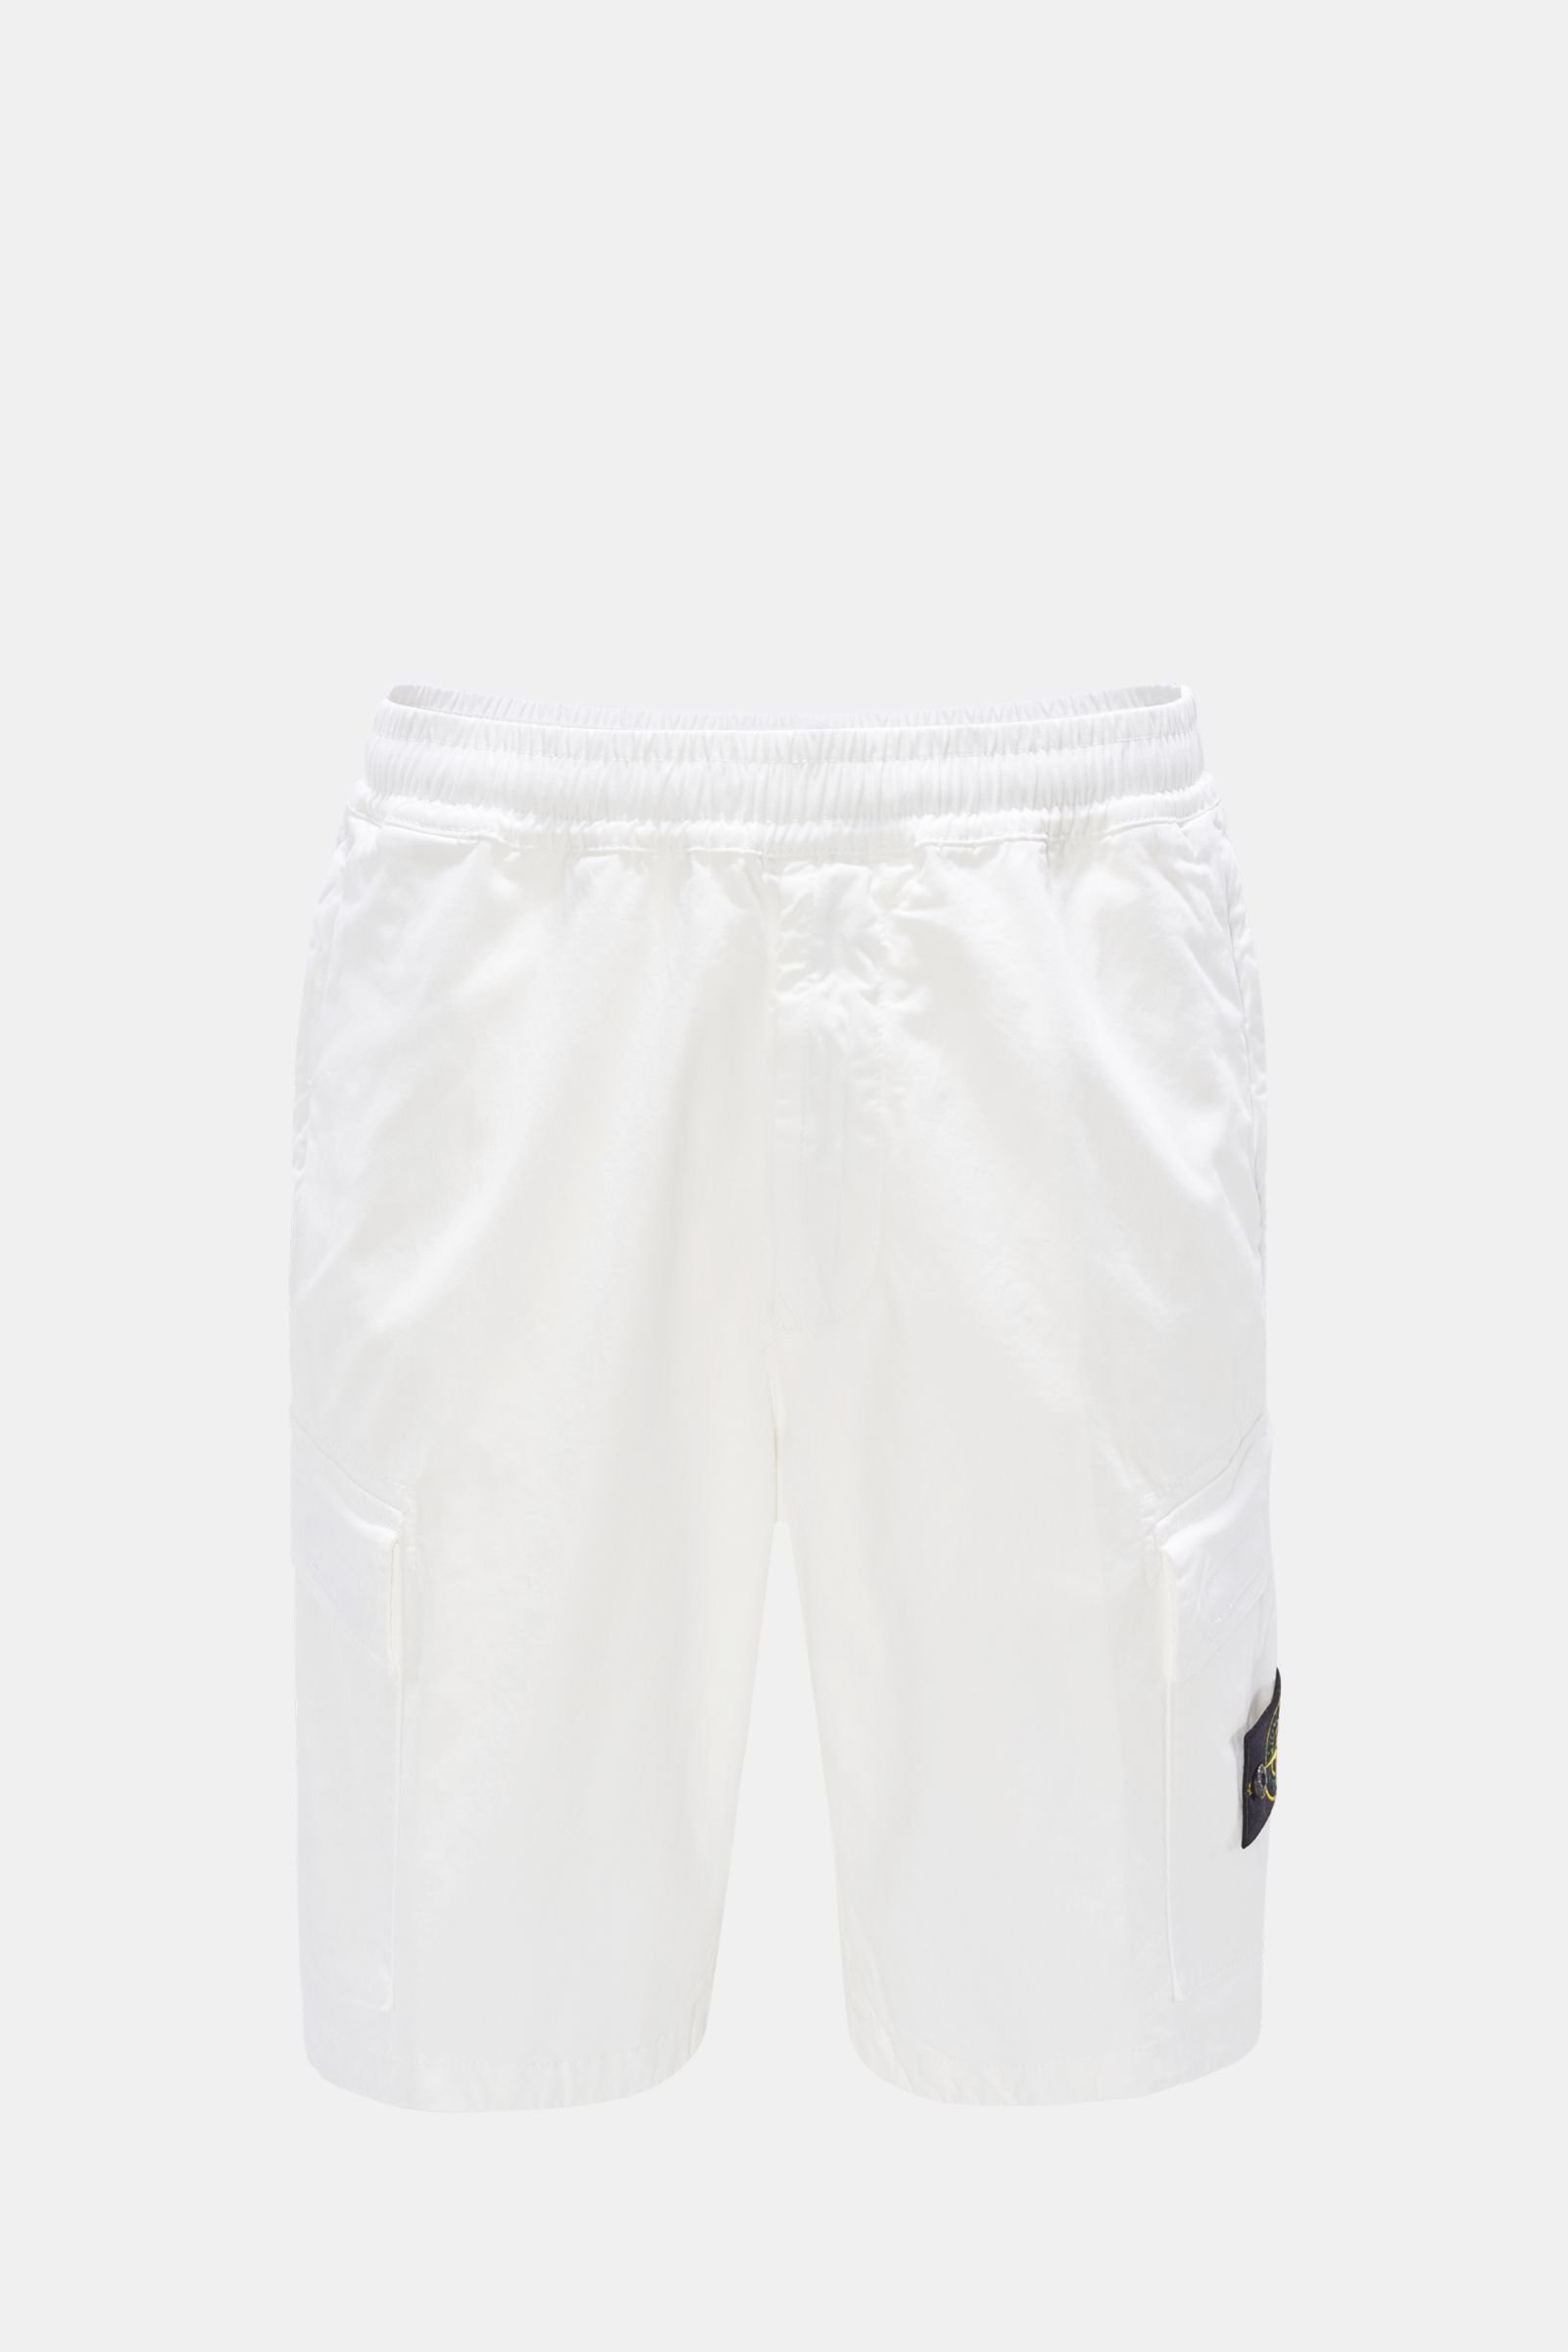 Cargo shorts white